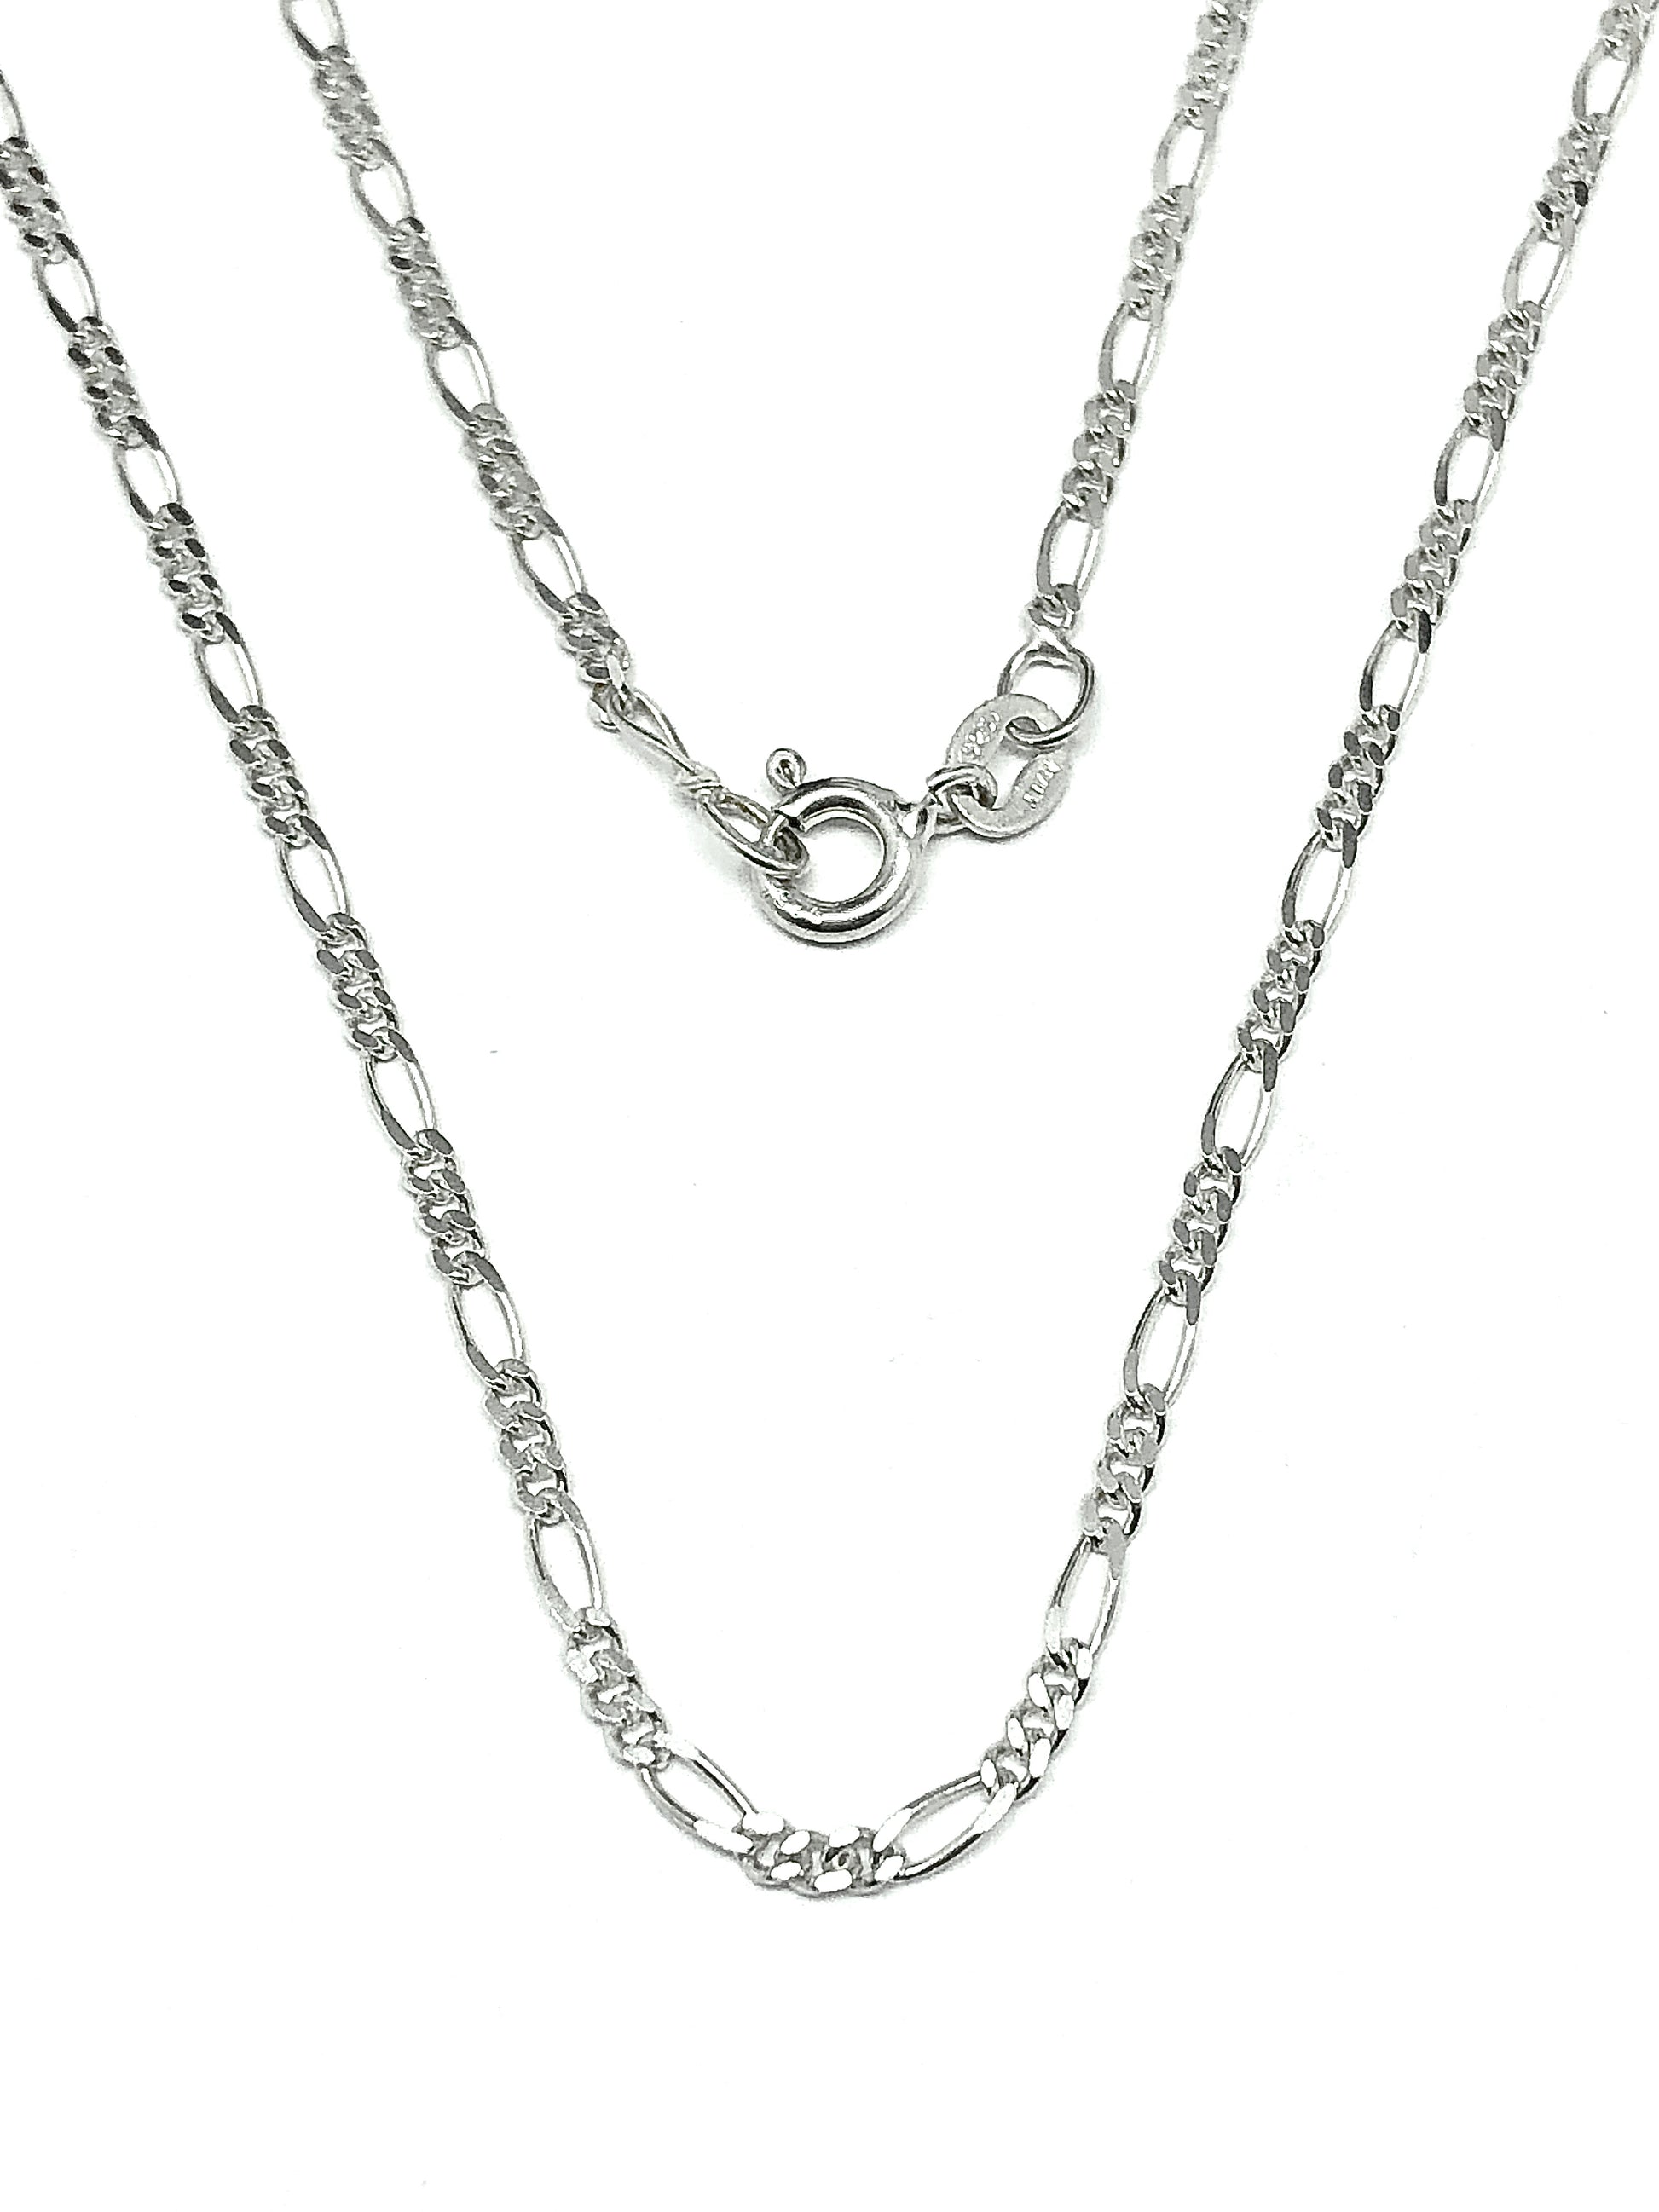 925 Solid Sterling Silver Box Chain, Elegant Dainty Silver Chain